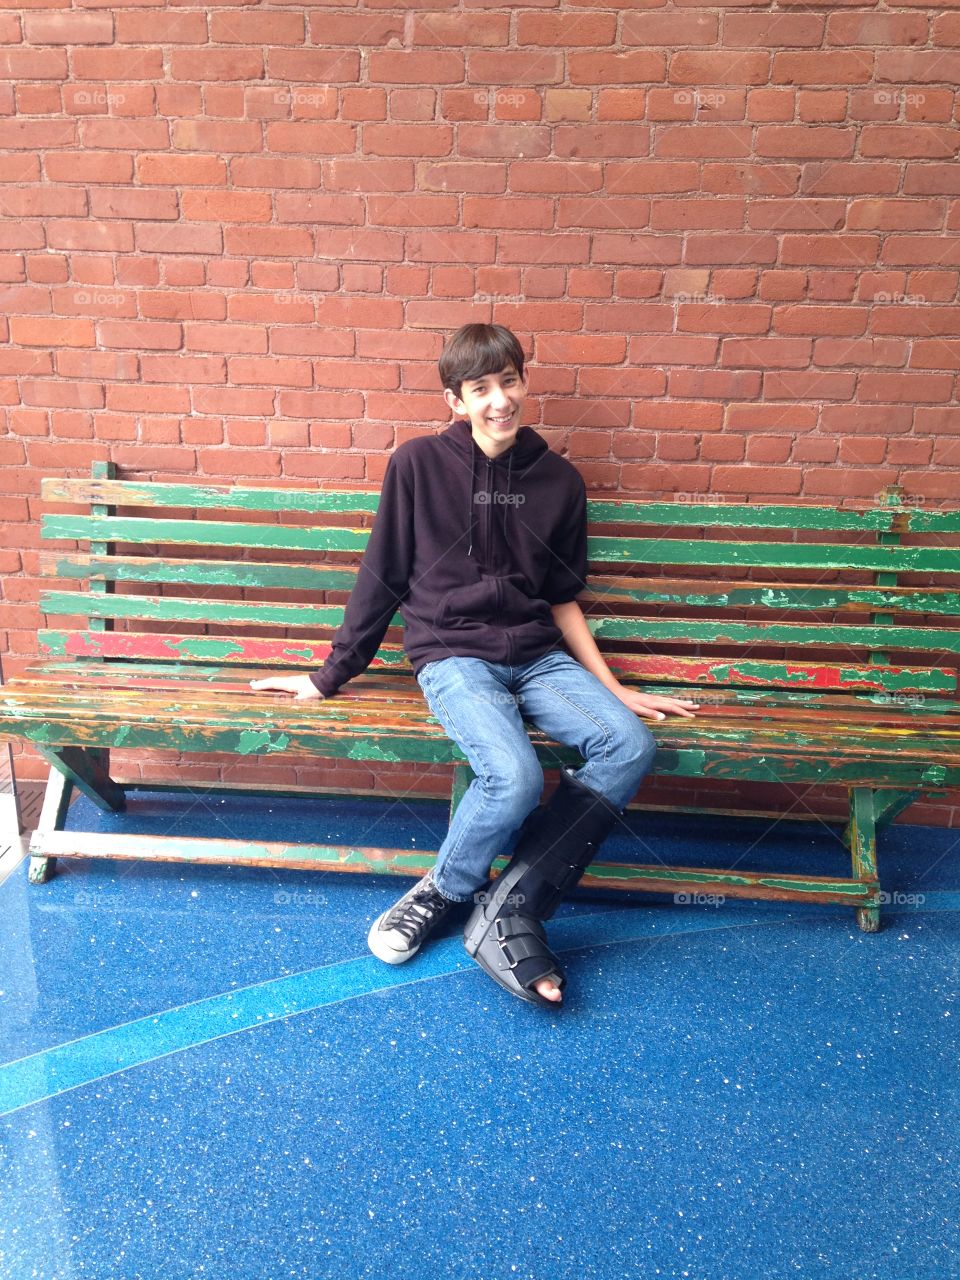 Me sitting on Walt Disney's bench at the Walt Disney Family Museum in San Francisco, CA. - June 2014